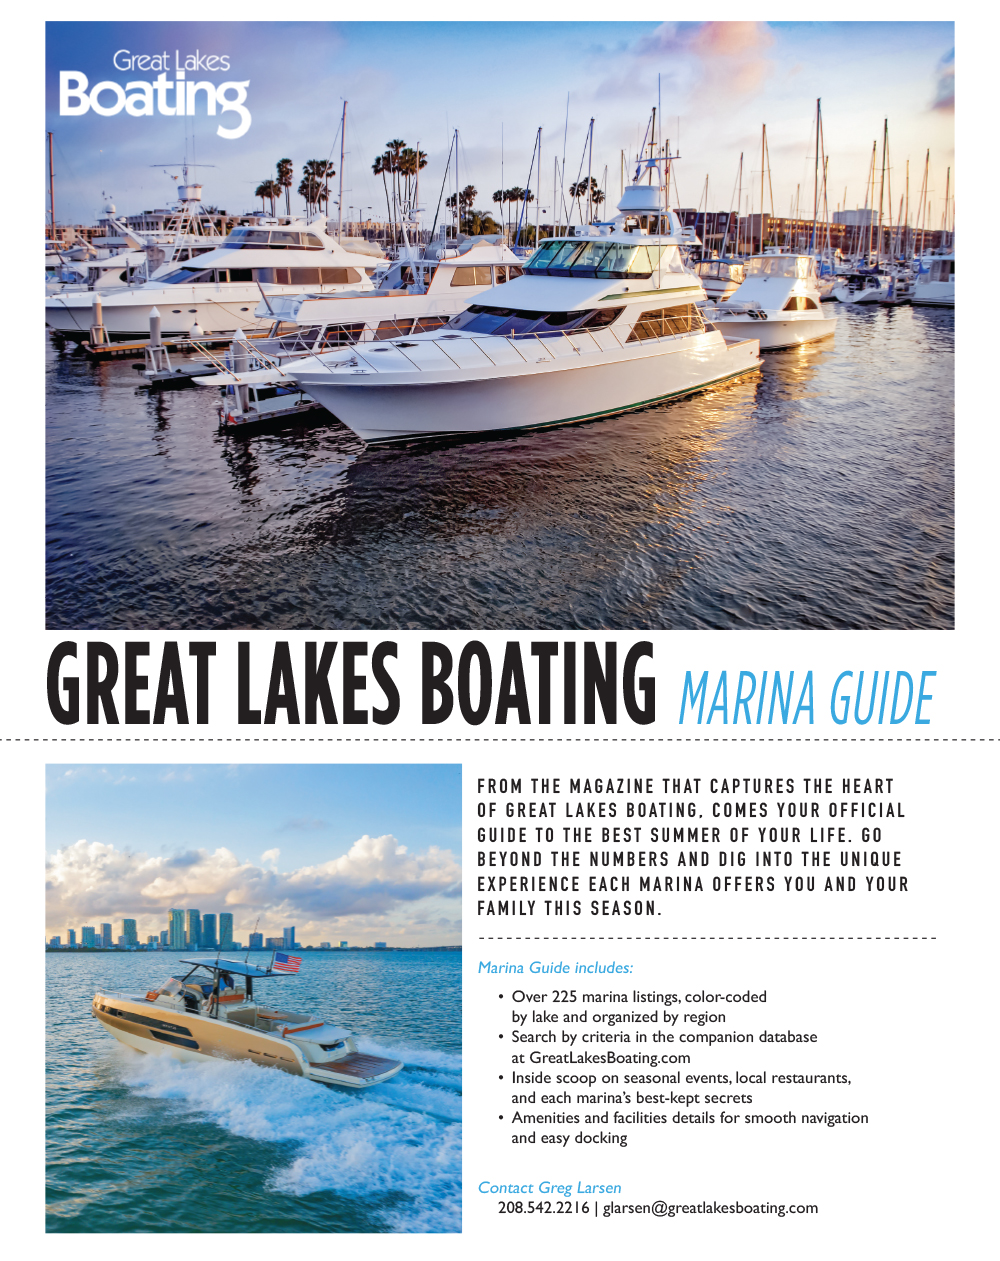 Great Lakes Boating Marina Guide Advertisement